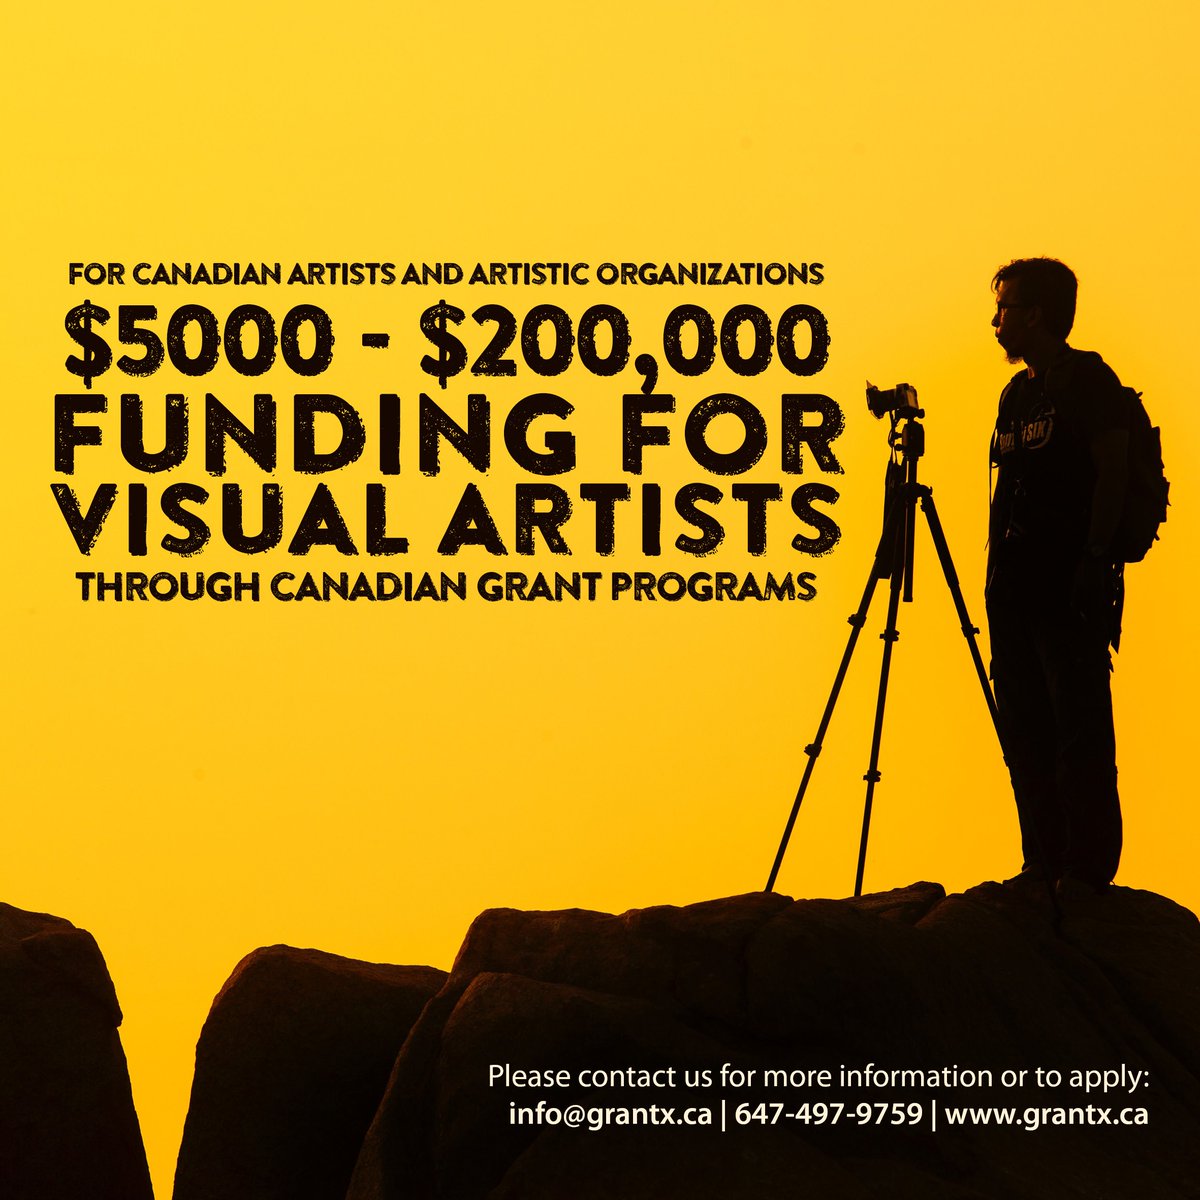 Funding for visual artists
#grantx #fundraiser #funding #fundraising #government #canadafilm #canadianfilm #canadianfilmmaker #canada #toronto #ontario #artist #canadianartists #visualart #canadianvisualartist @CanFilmFest  #tiff @TIFF_NET @Canadianfilmcom